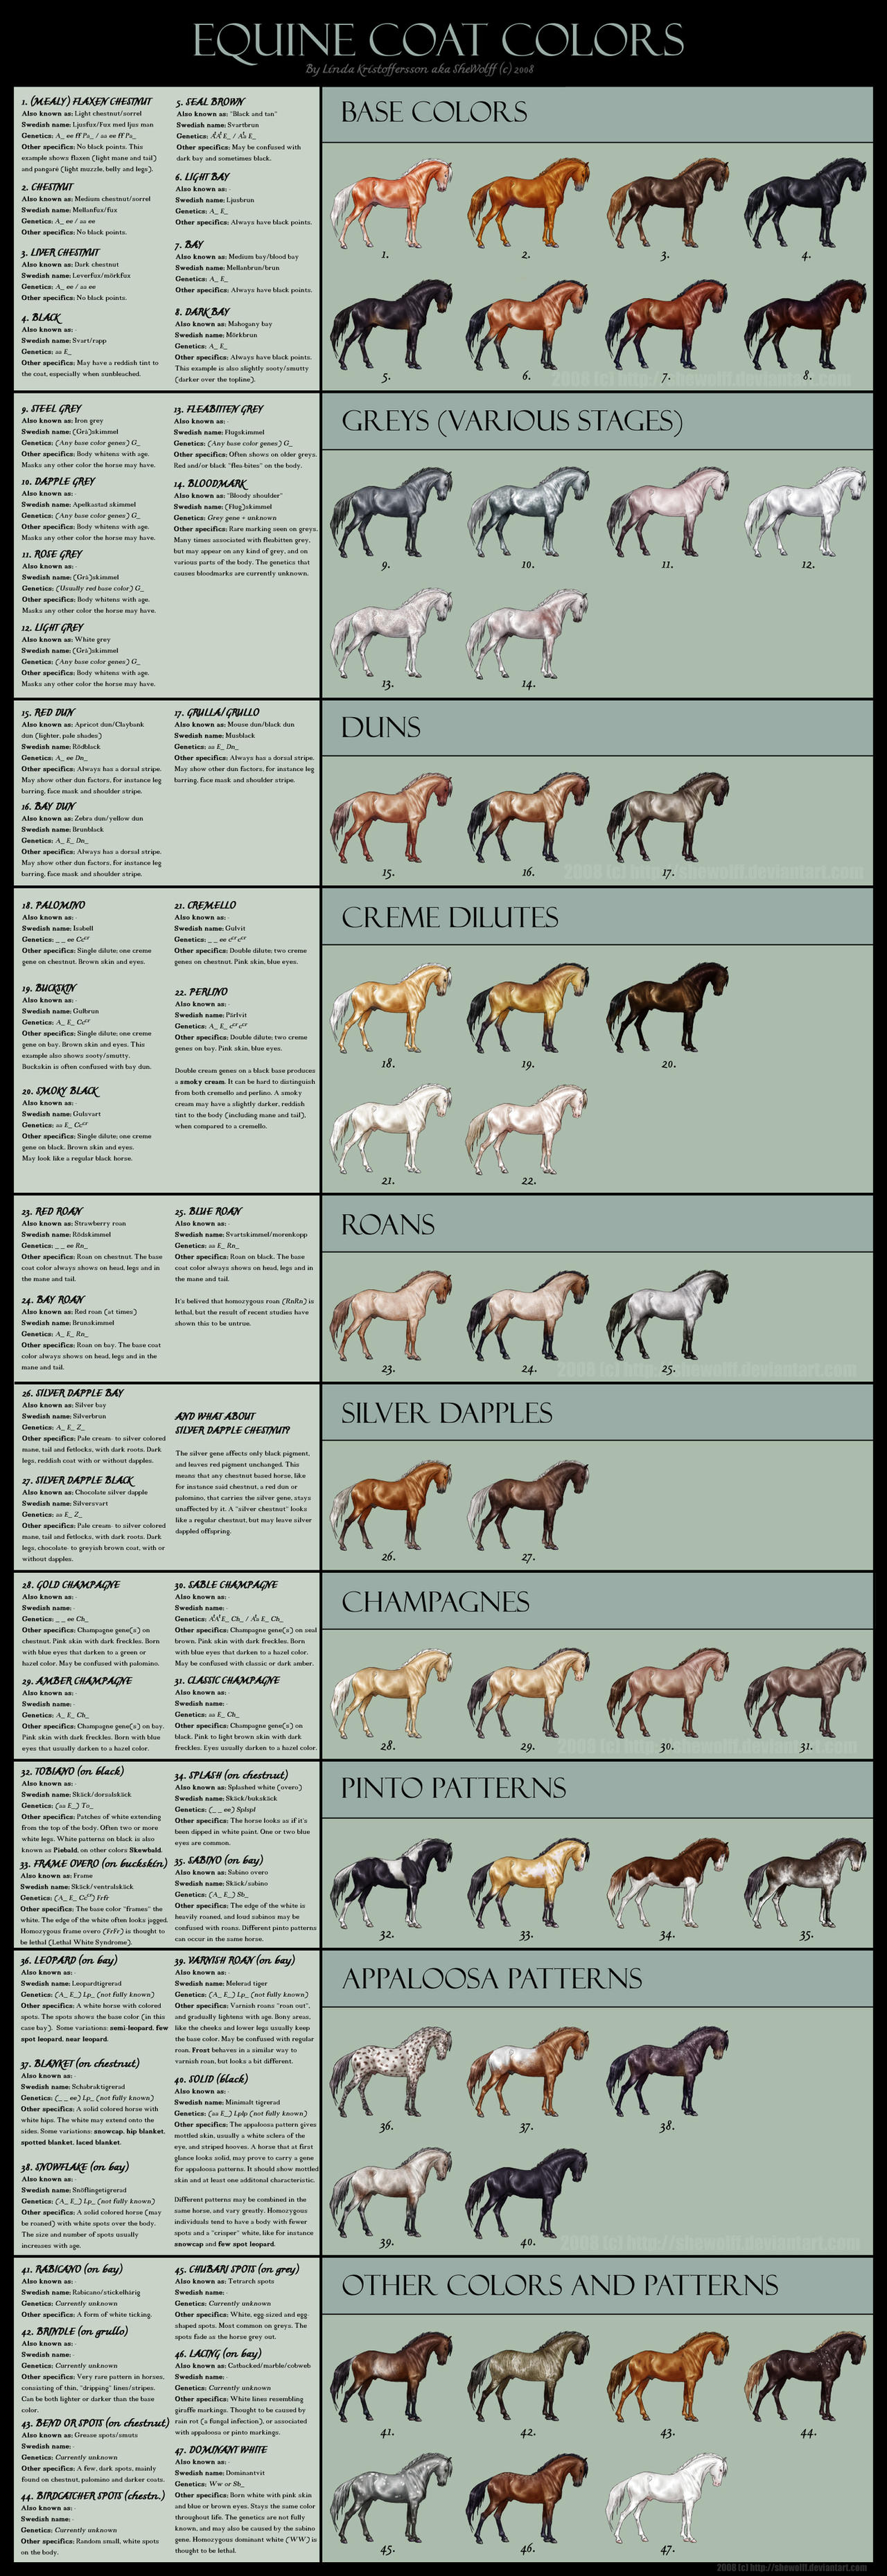 Equine coat colors